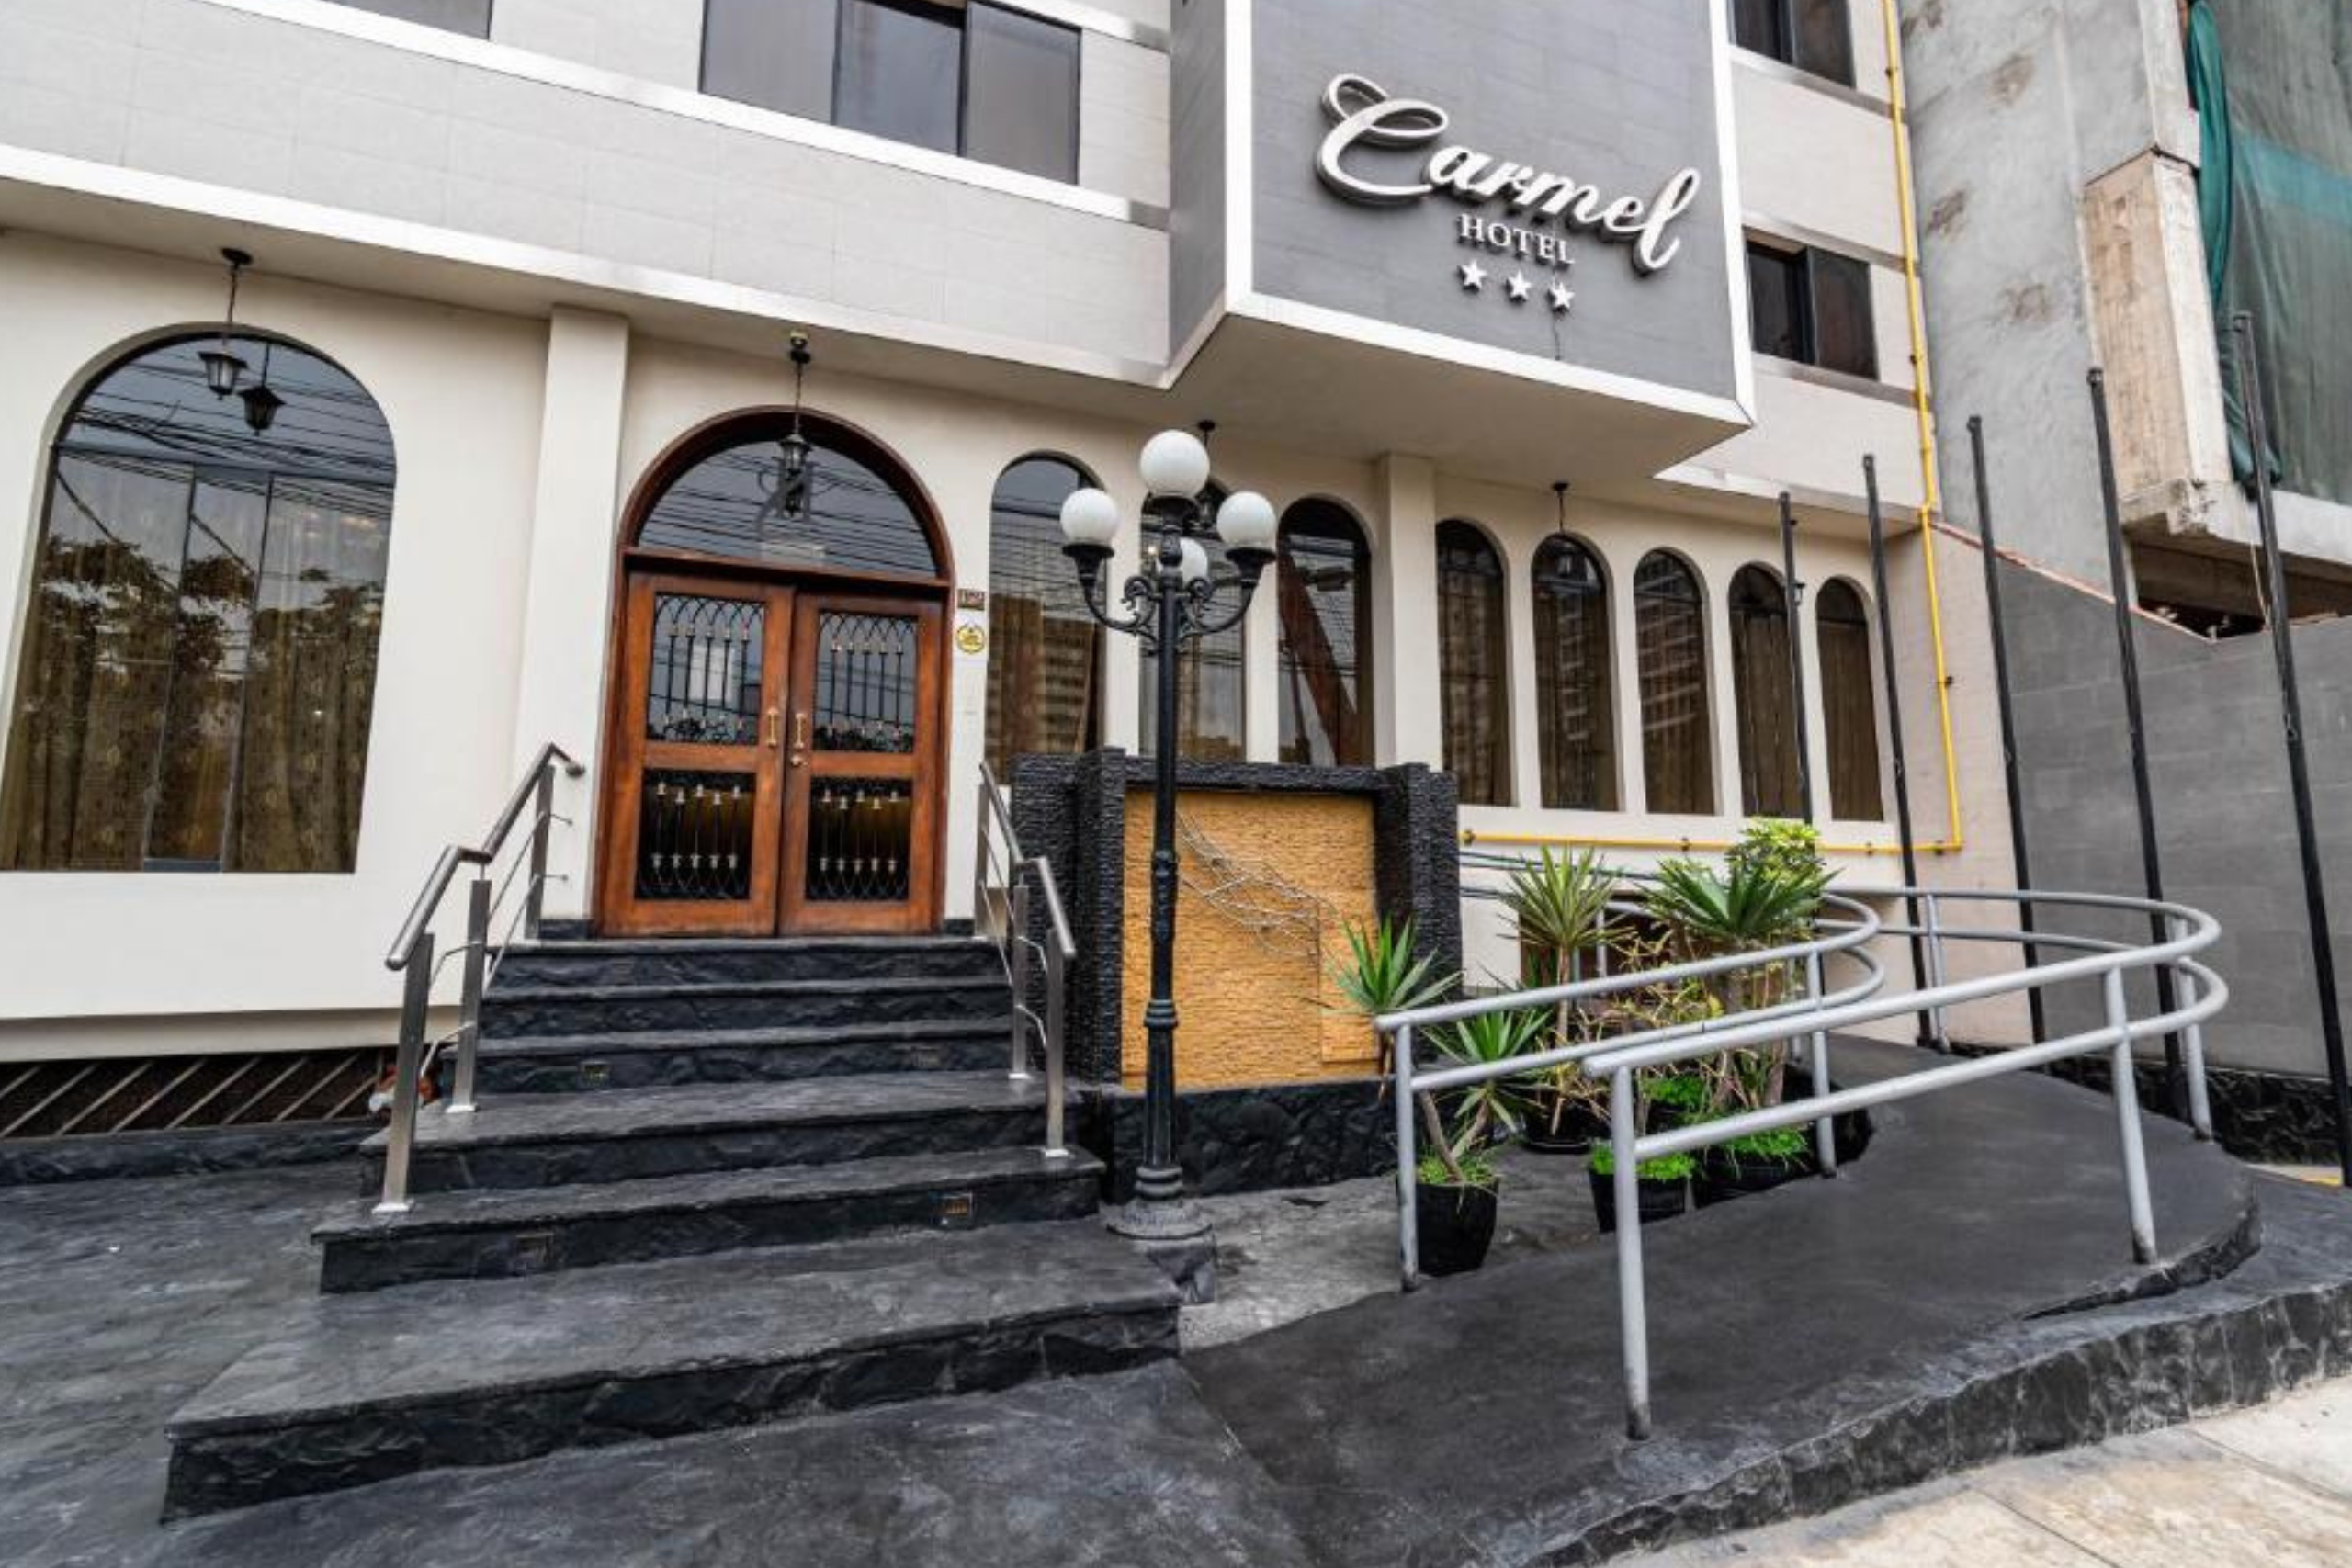 Hotel Carmel